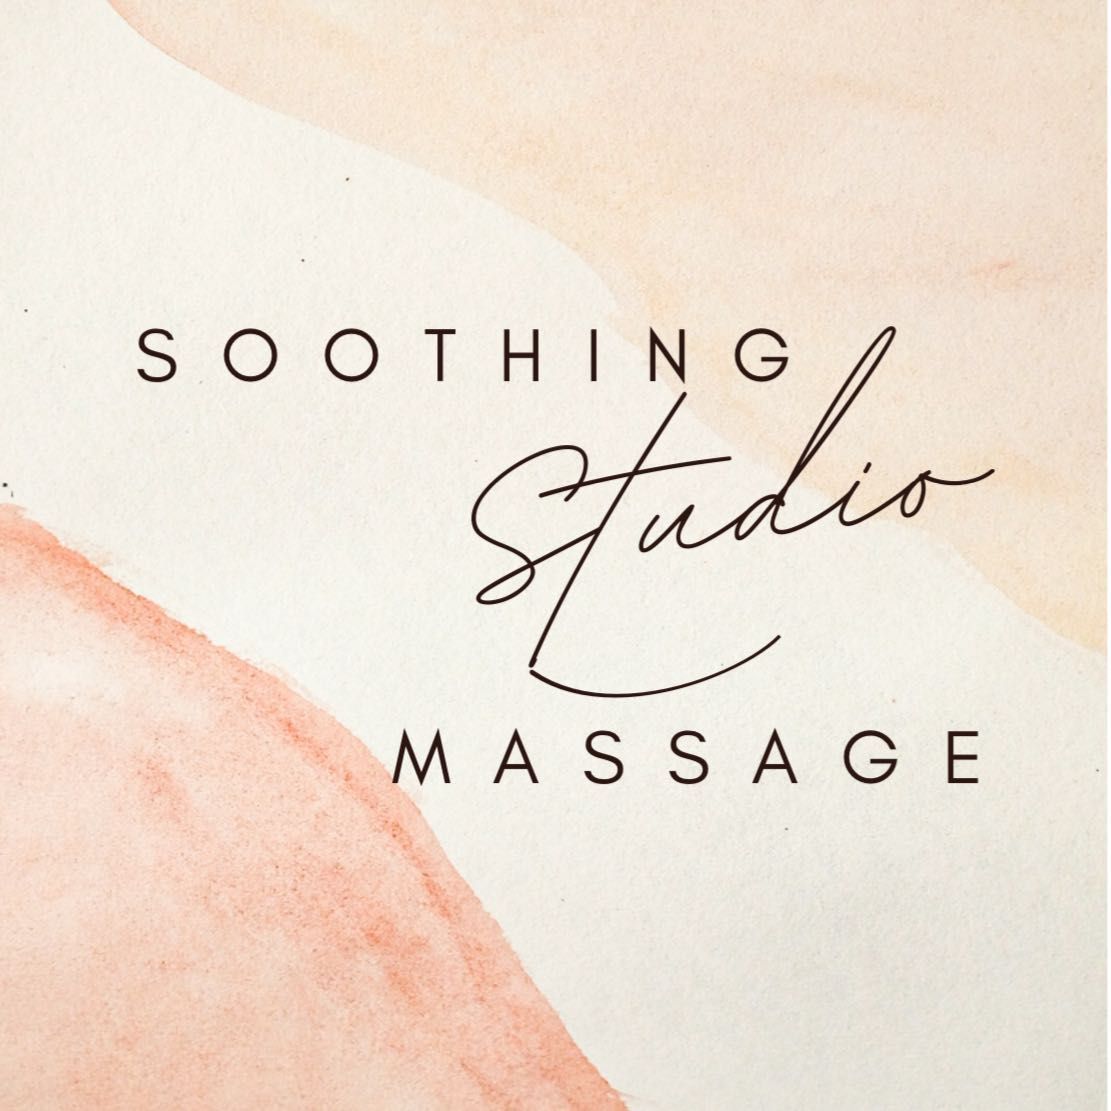 Soothing massage studio, 22157 Clarendon St, Woodland Hills, Woodland Hills 91367